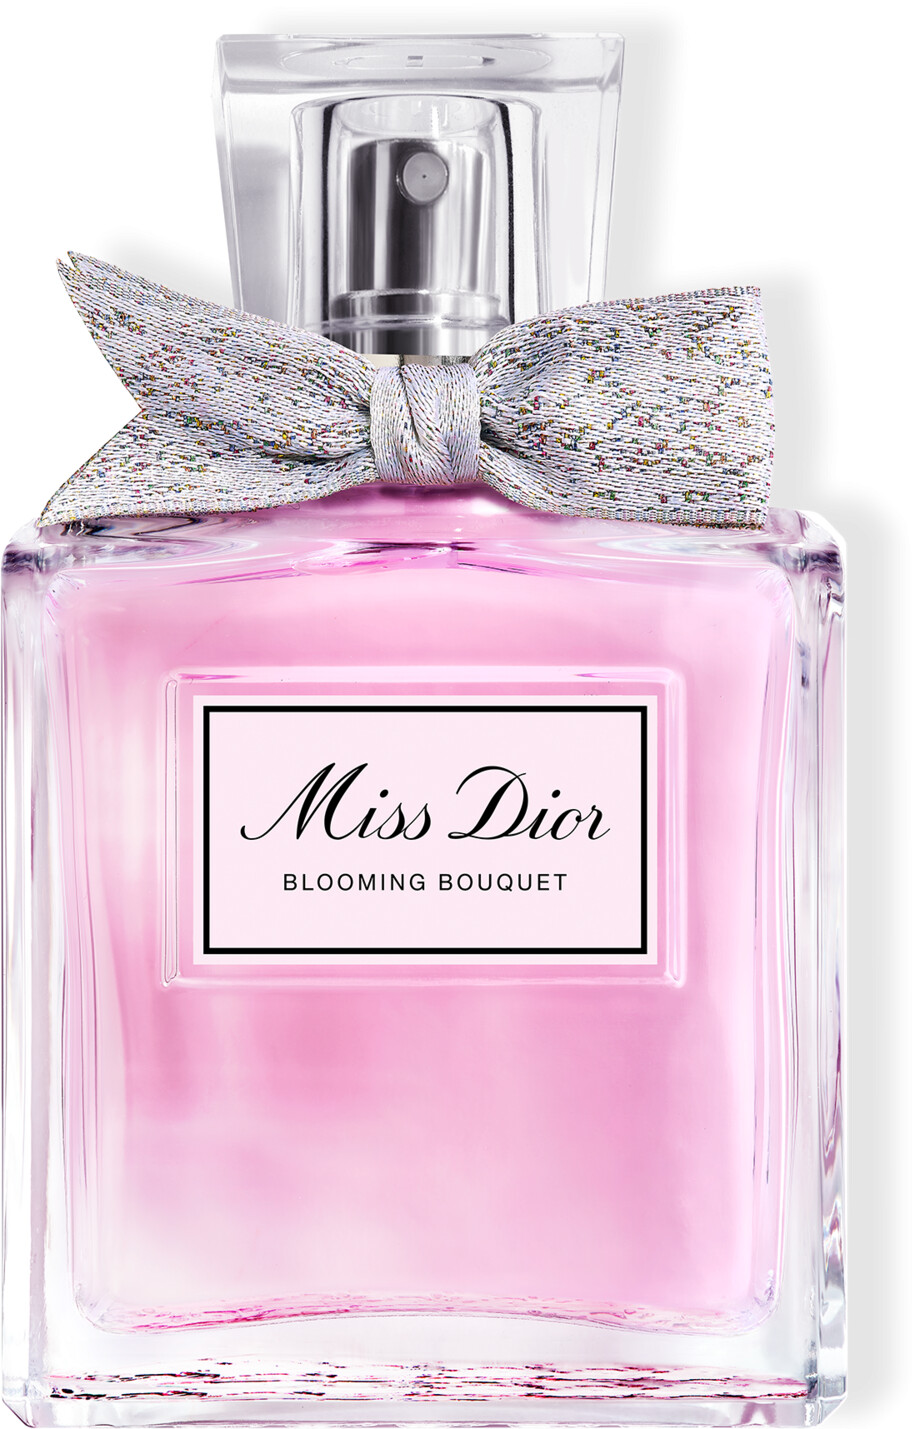 DIOR Miss Dior Blooming Bouquet Eau de Toilette Spray 50ml